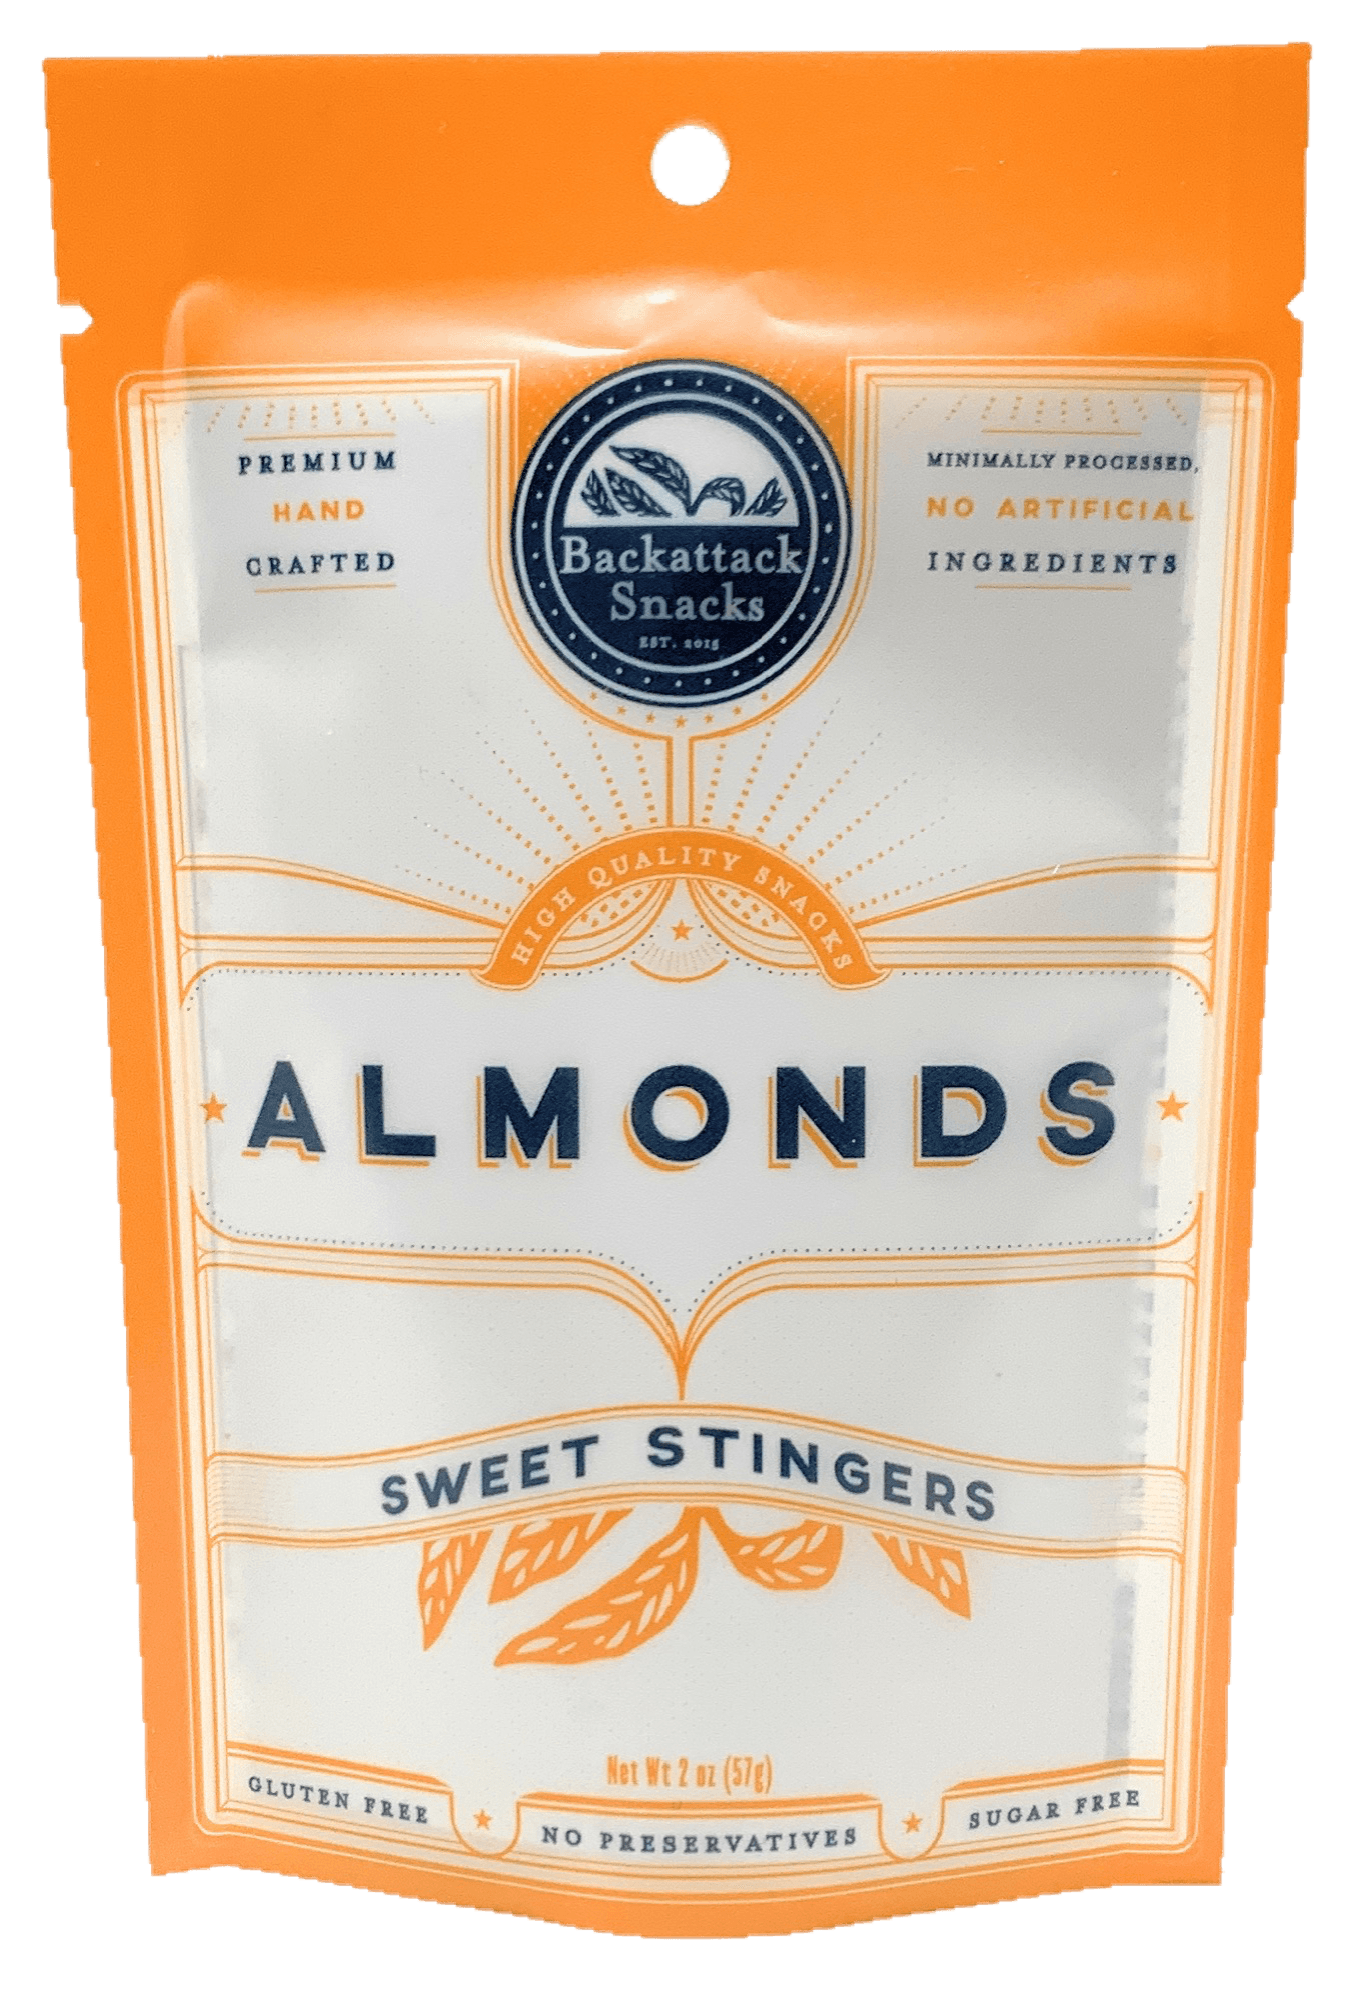 Sweet Stingers Honey Roasted Almonds 2oz packs - Backattack Snacks 